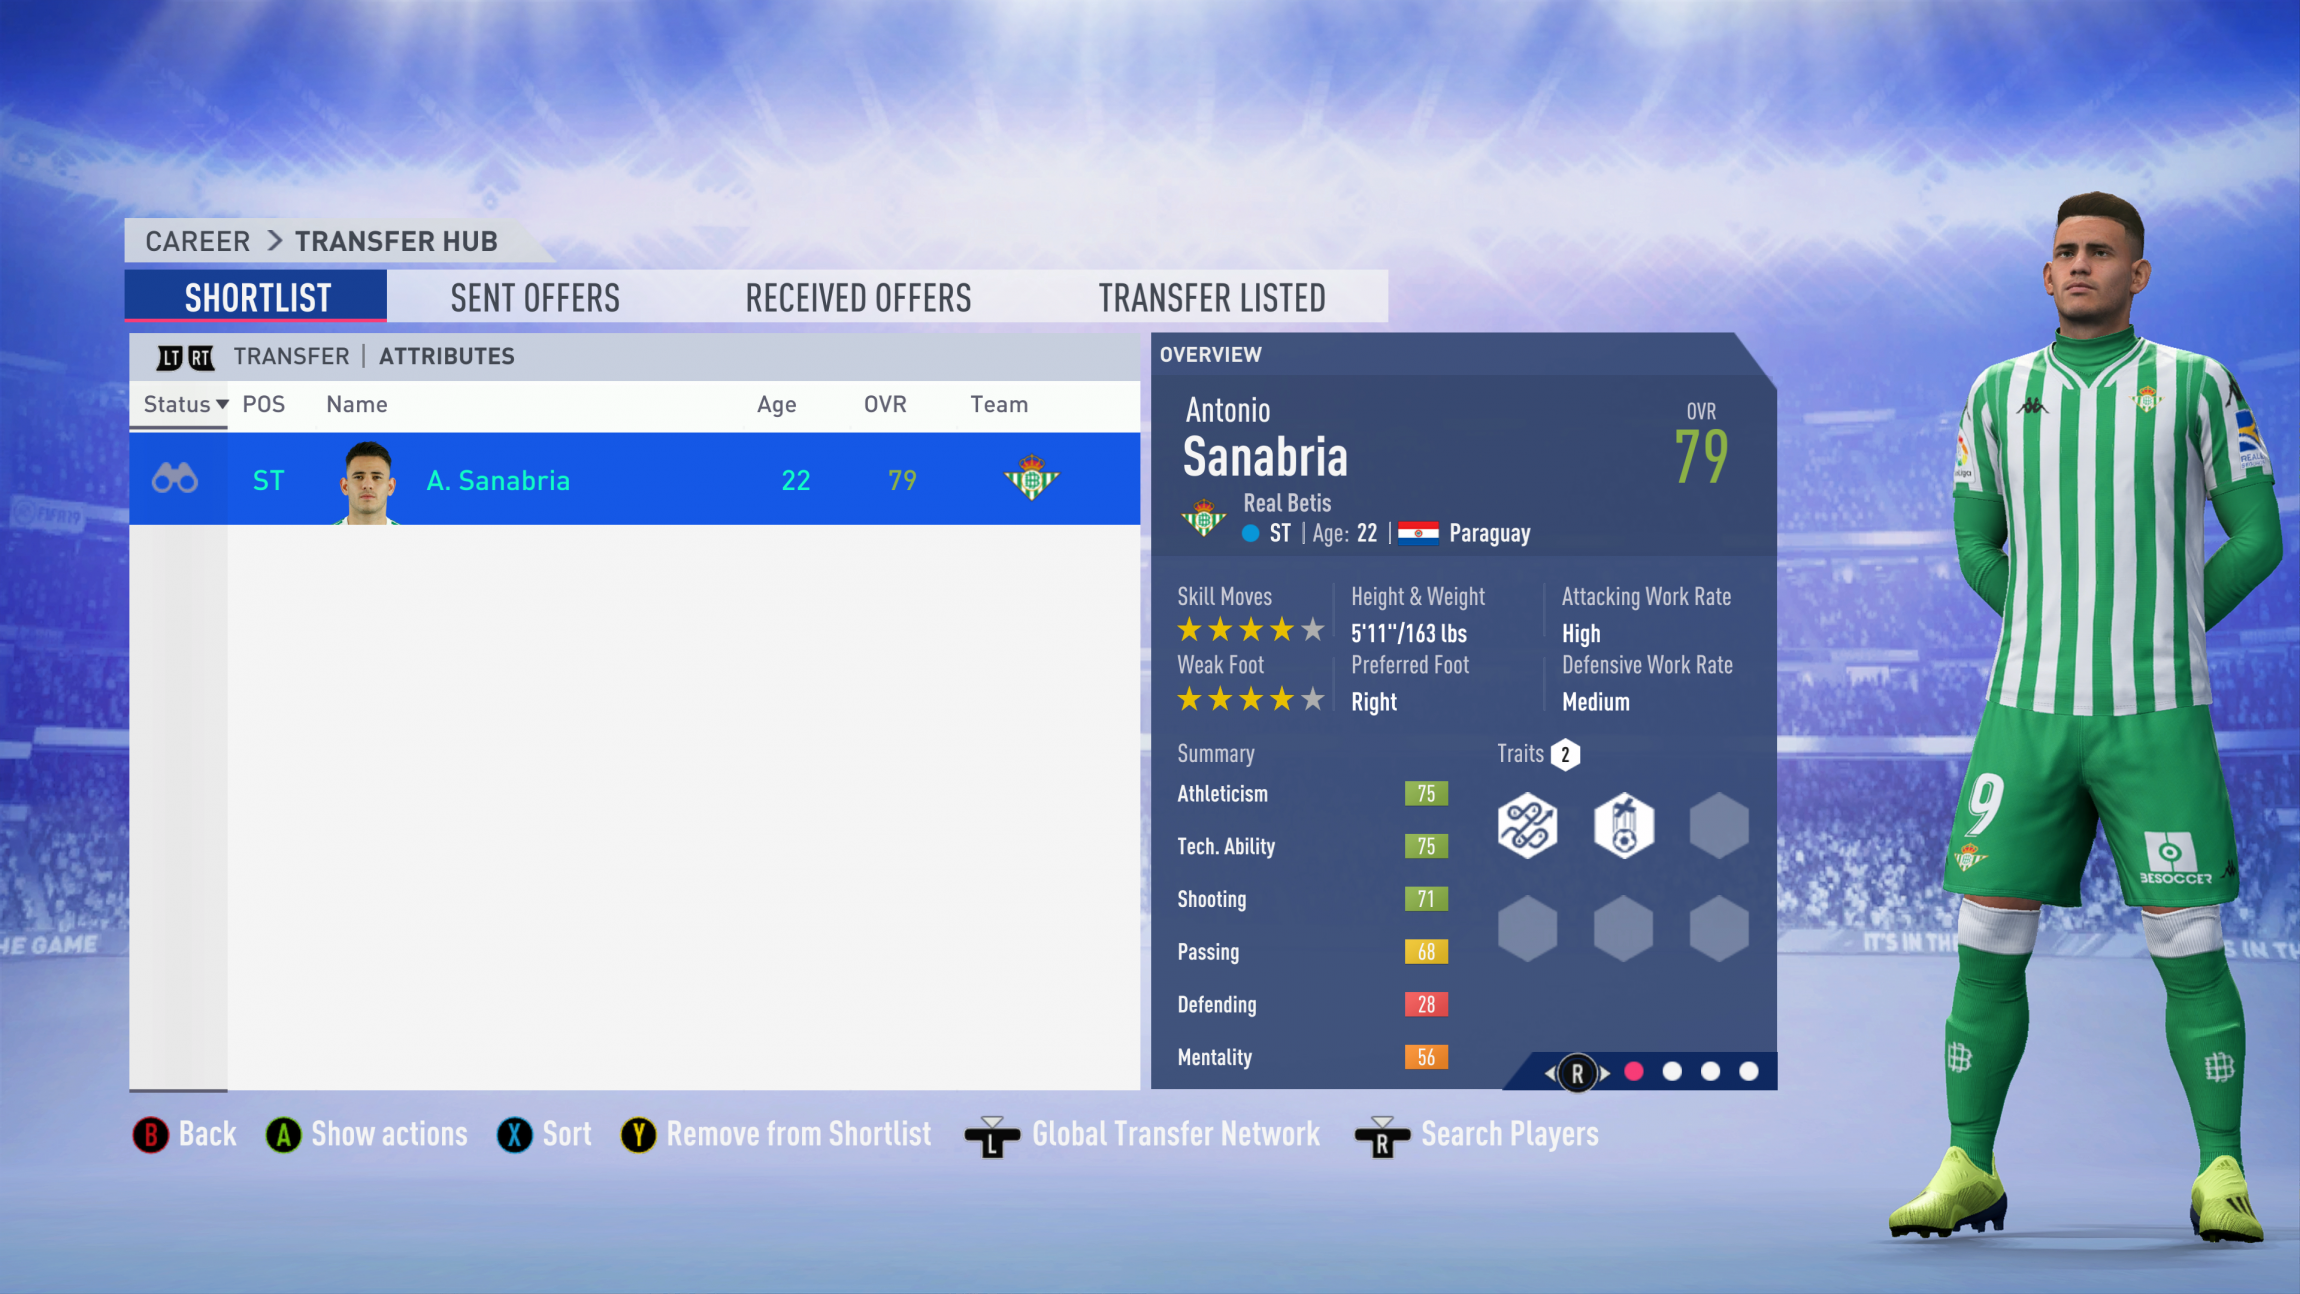 FIFA 19 Southampton Team Guide - Sanabria